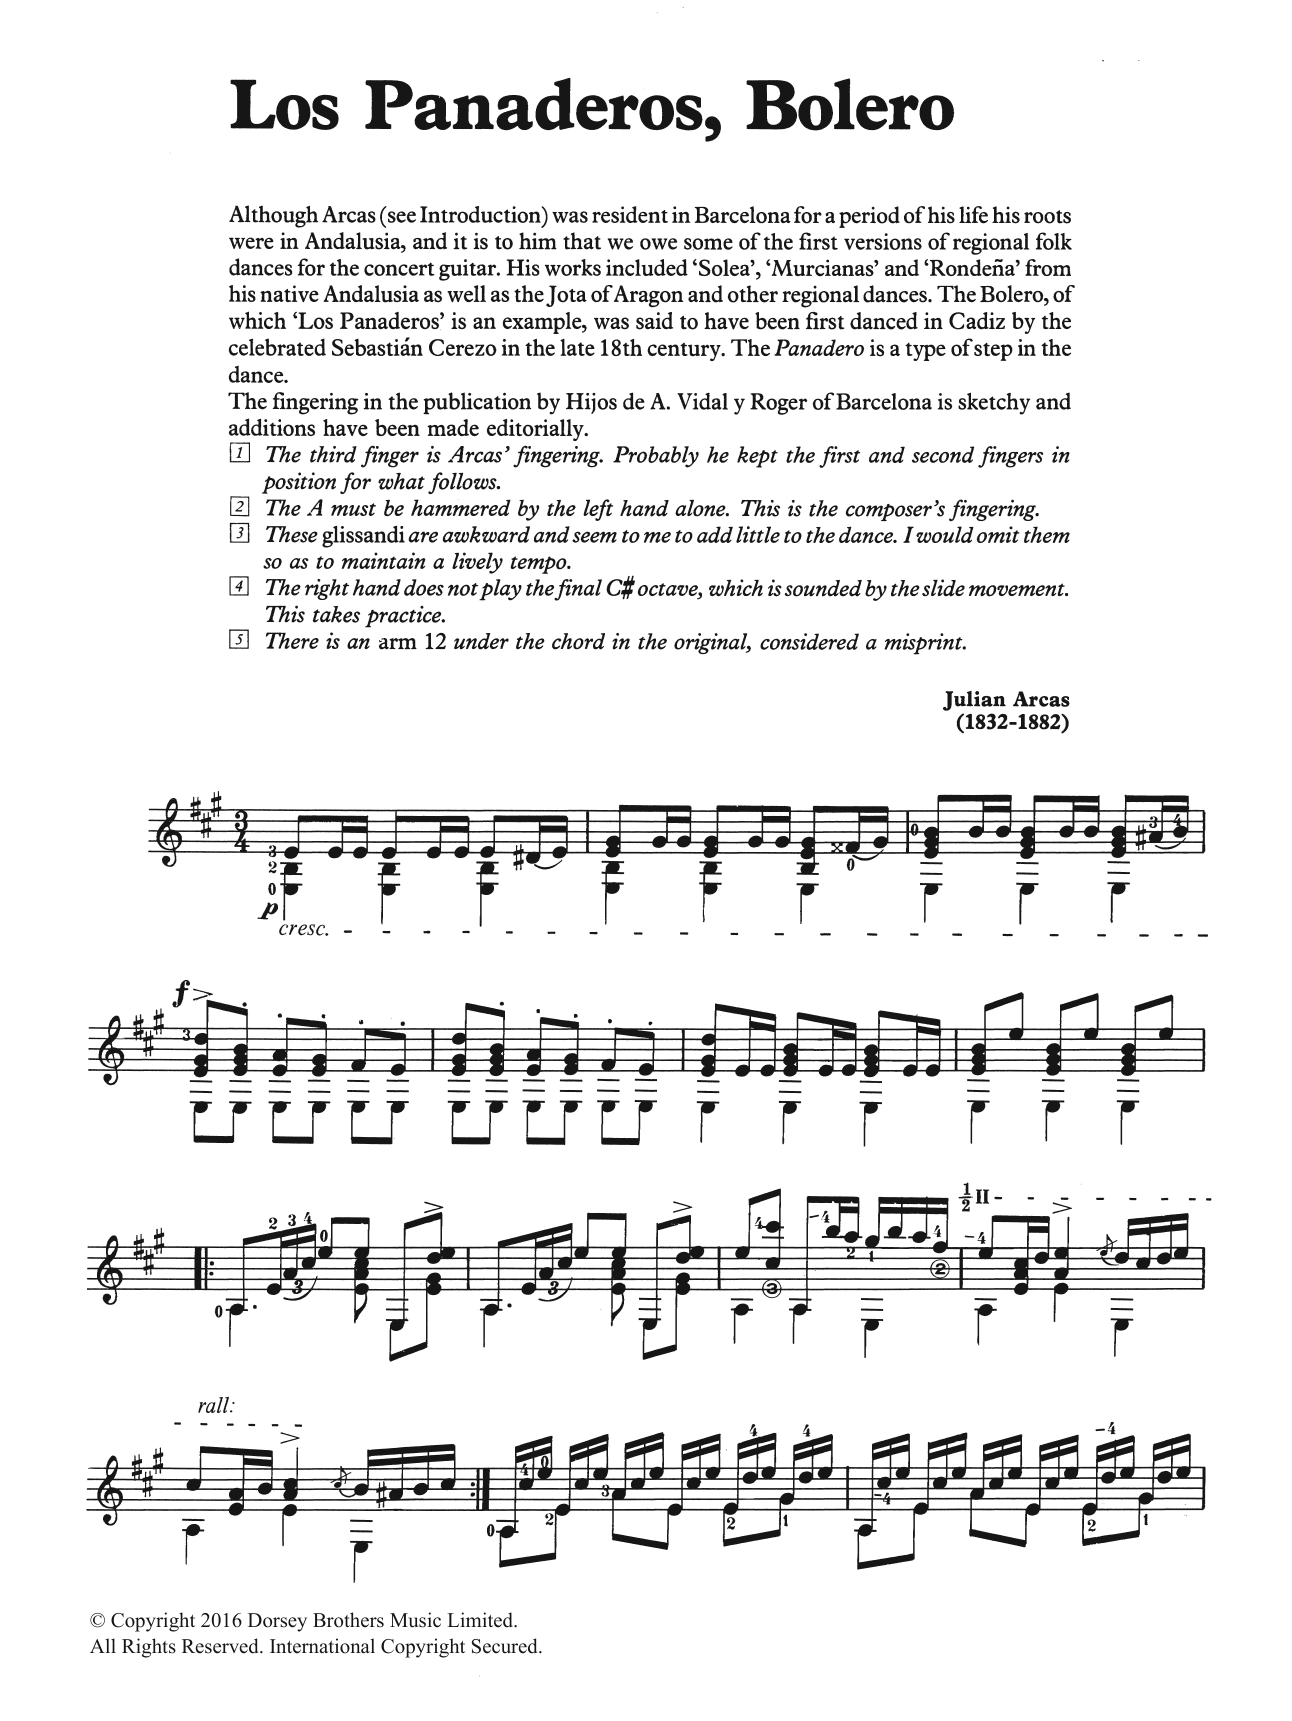 Julian Arcas Los Panaderos, Bolero Sheet Music Notes & Chords for Guitar - Download or Print PDF